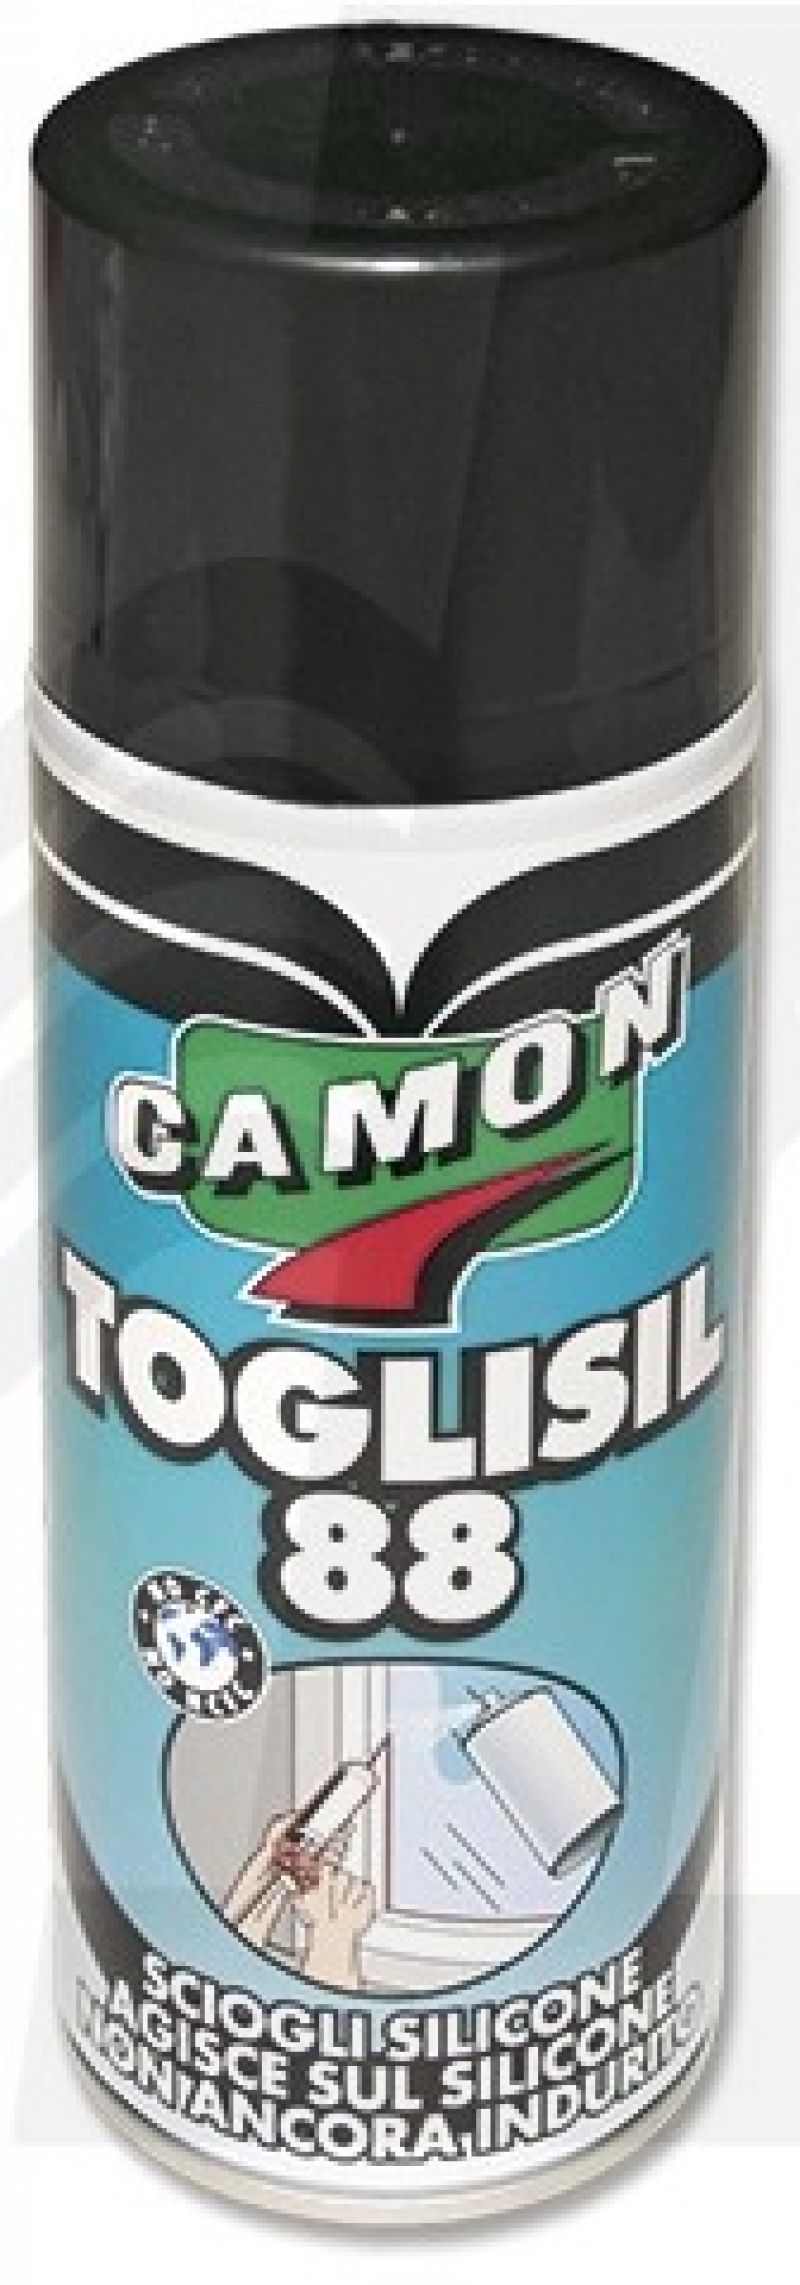 CAMON Srl - TOGLISIL-88